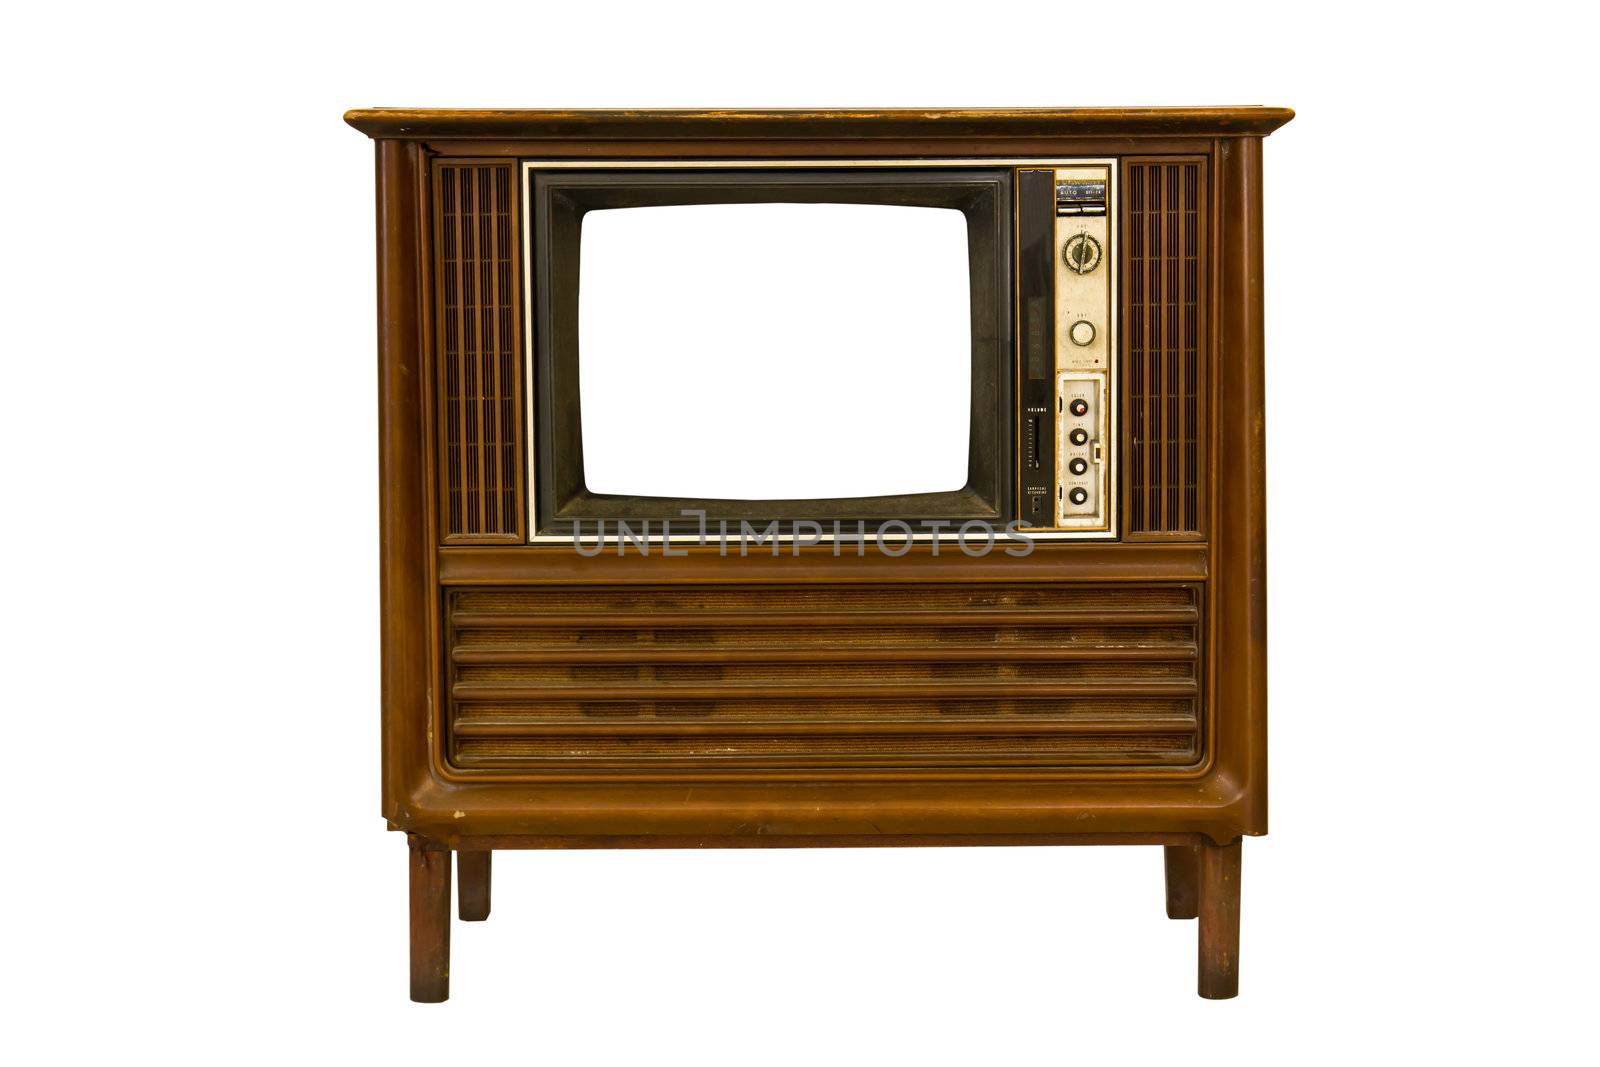 Retro Vintage television  on a white background